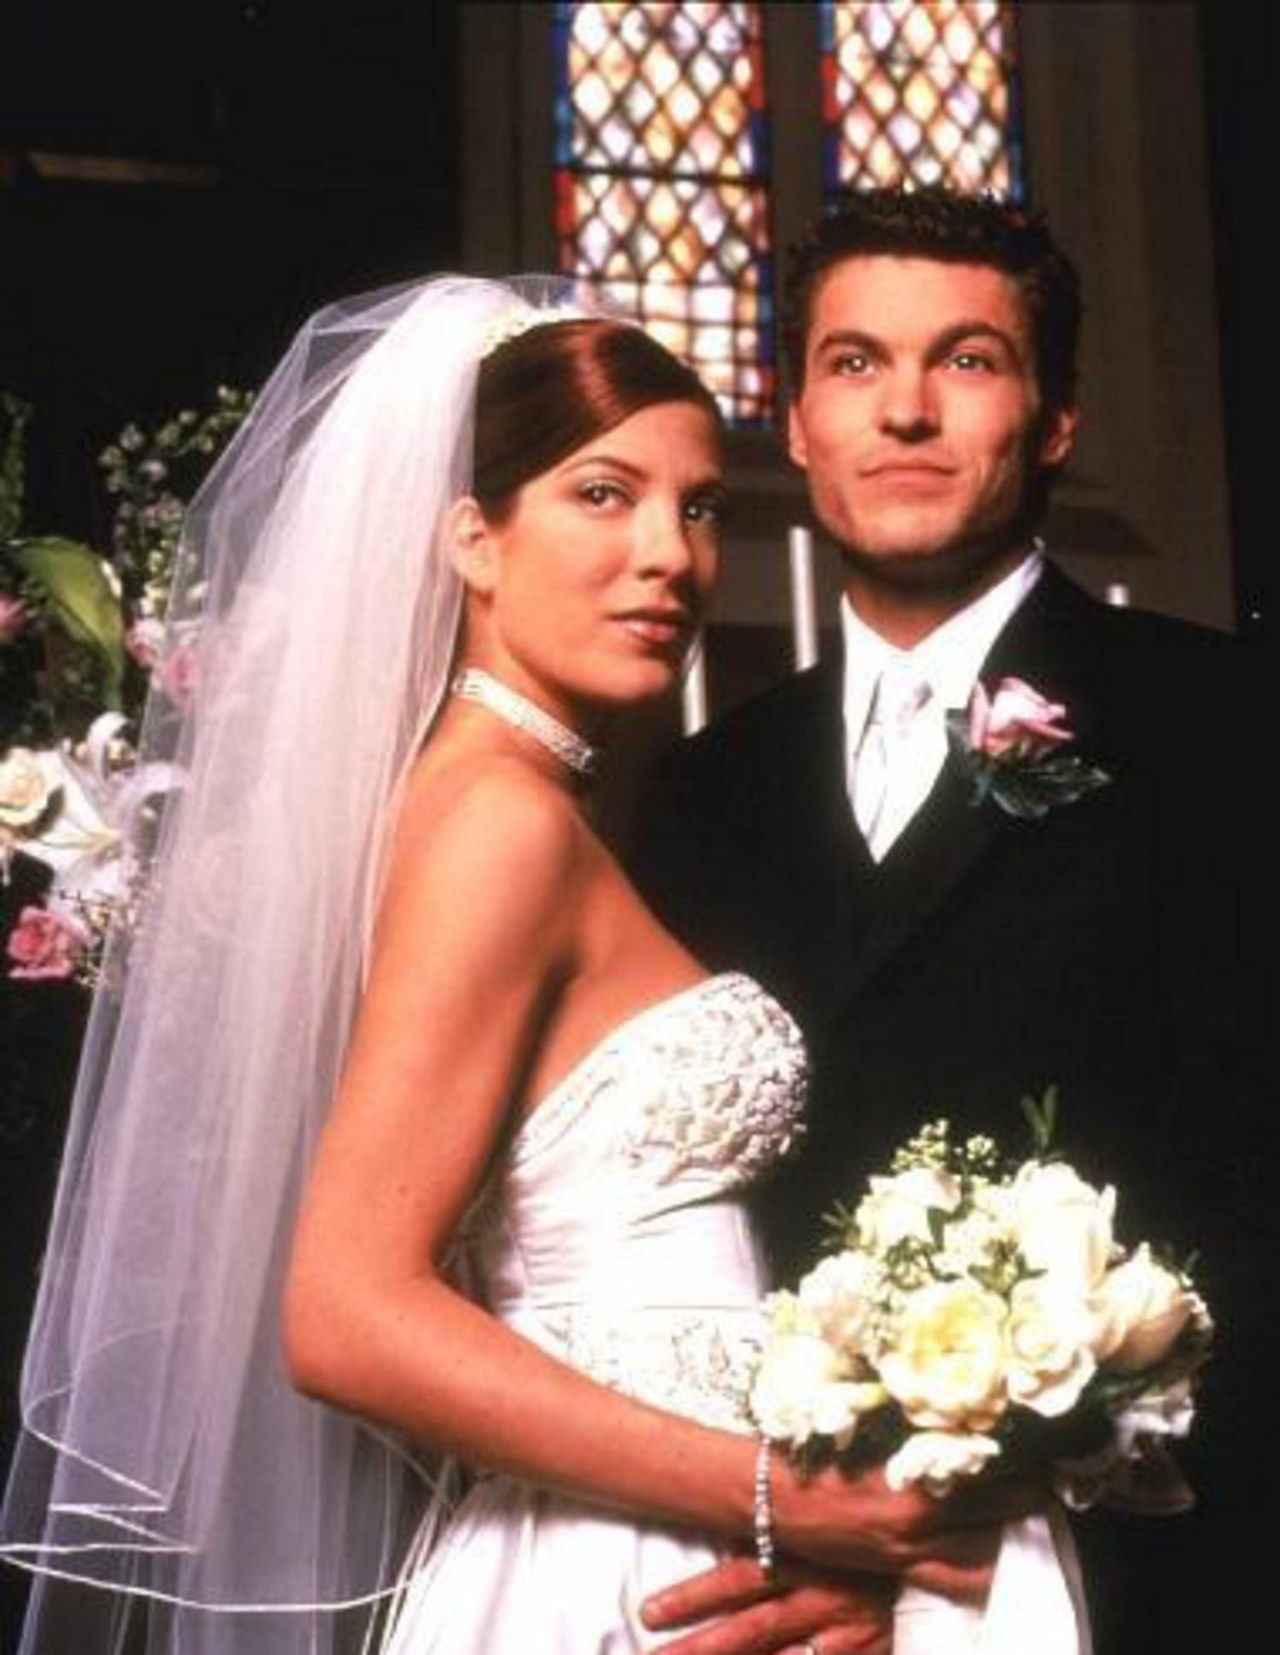 david donna wedding 90210